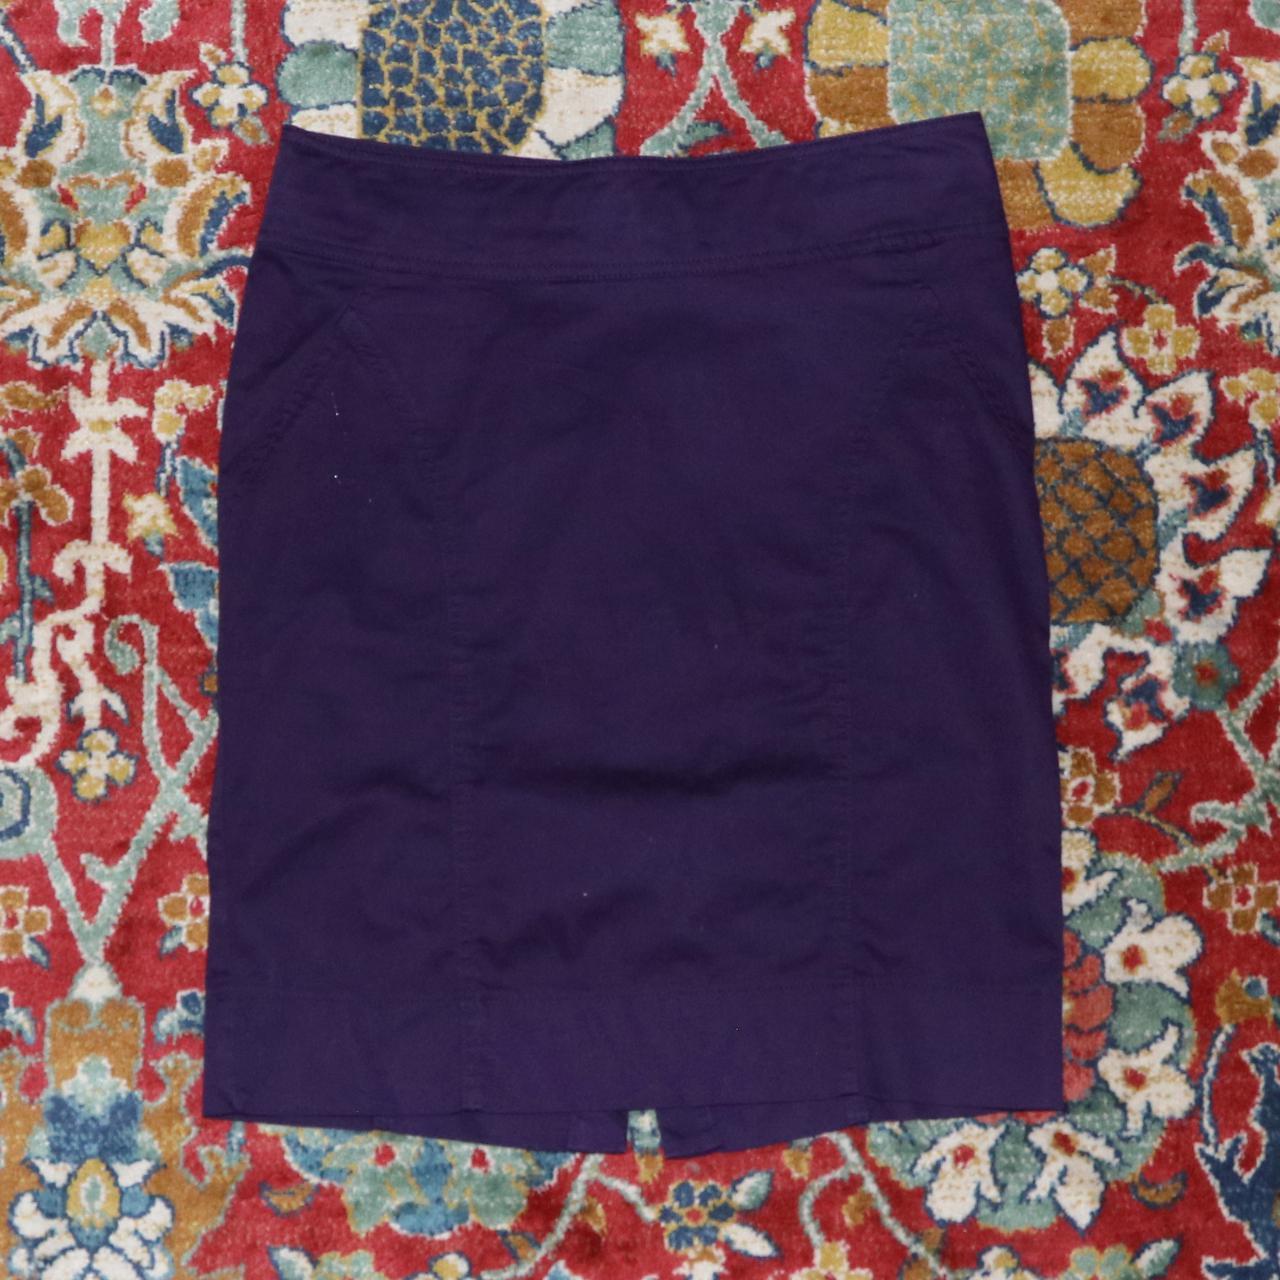 dark purple pencil skirt. from 